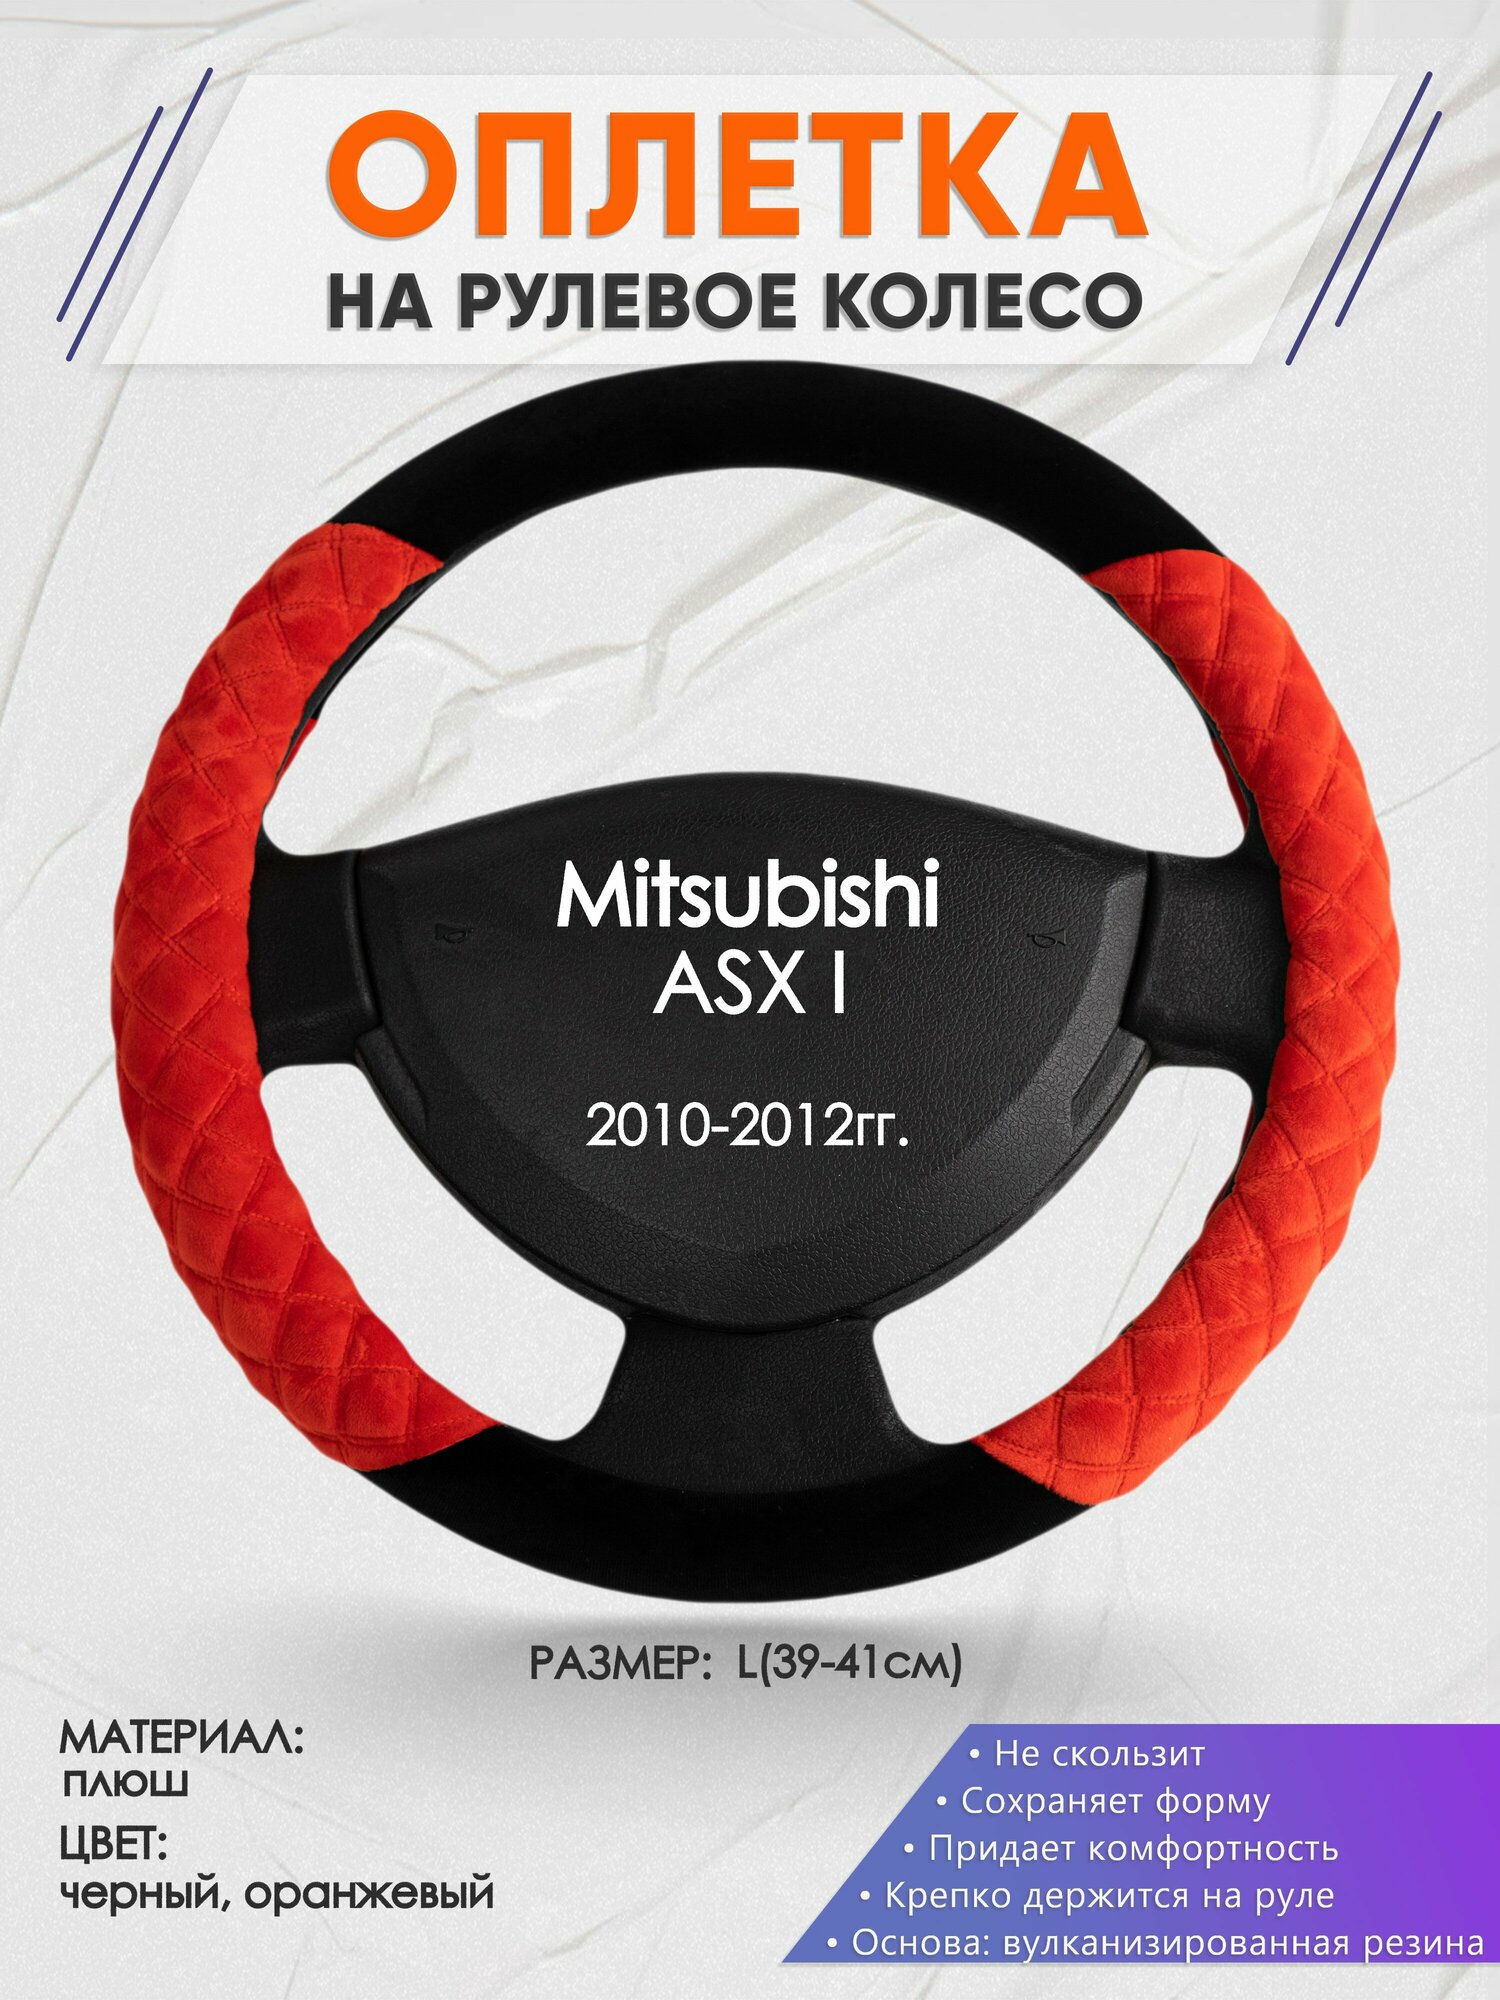 Оплетка на руль для Mitsubishi ASX I(Митсубиси АСХ) 2010-2012, L(39-41см), Замша 37